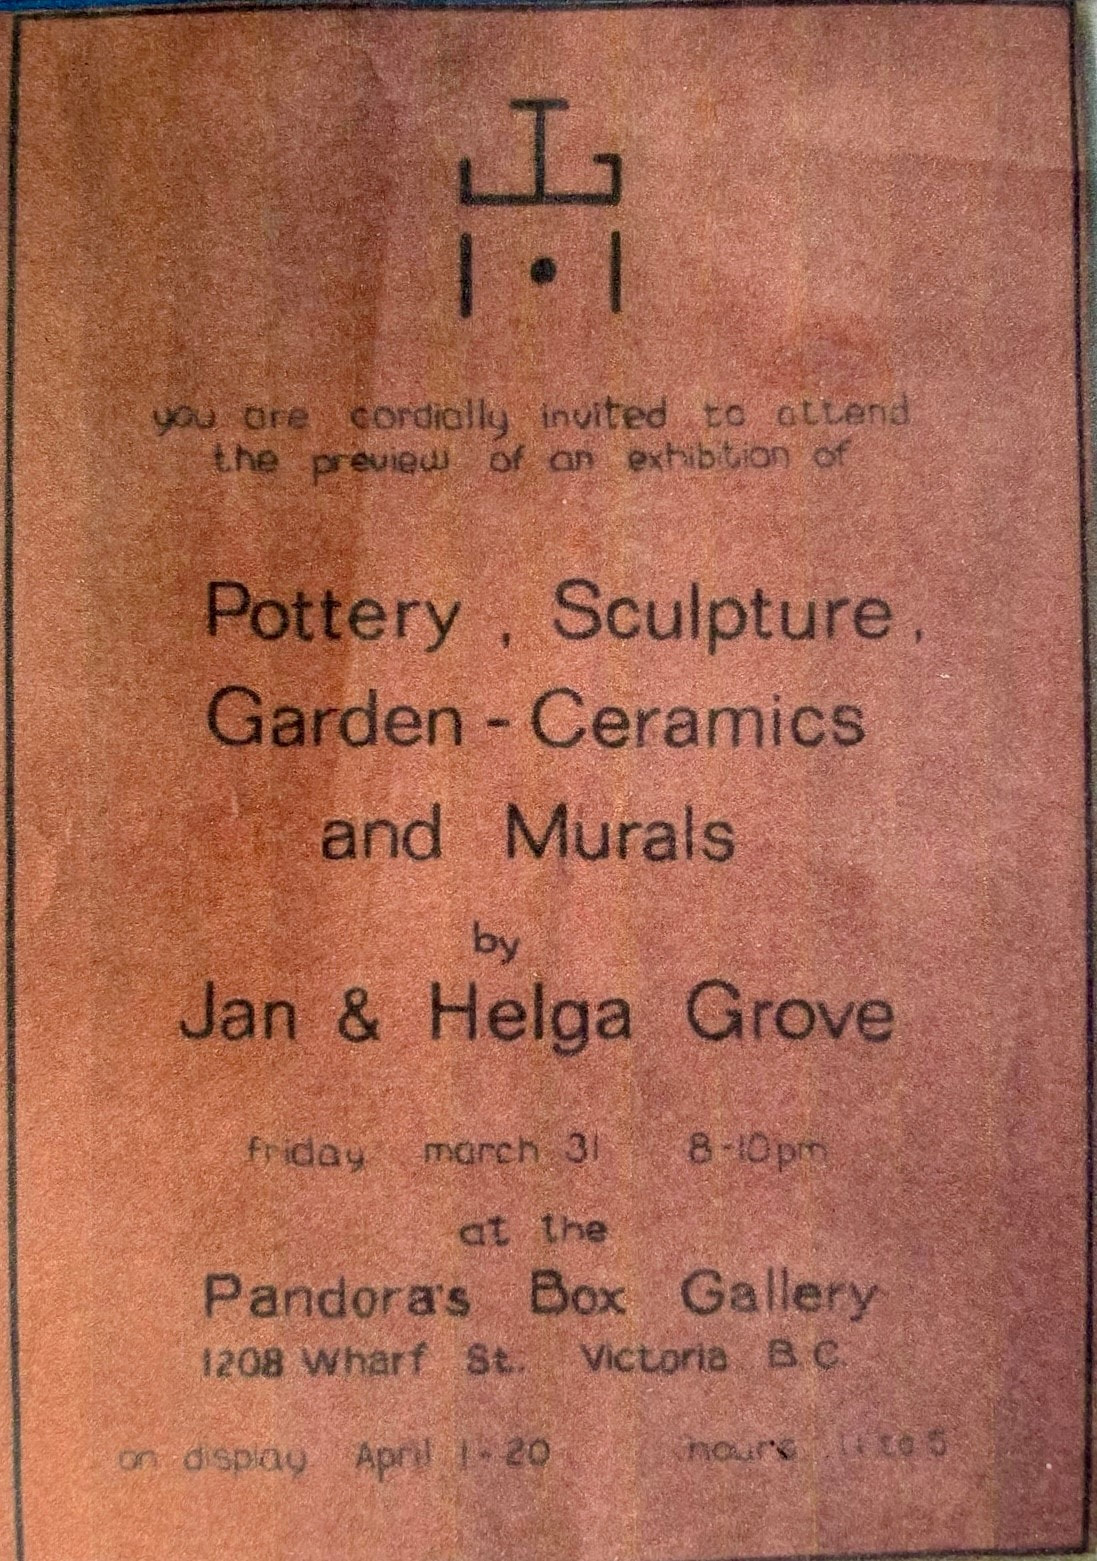 Jan Helga Grove pottery exhibition flyer 1967 hieroglyphic sculpture pottery wanted